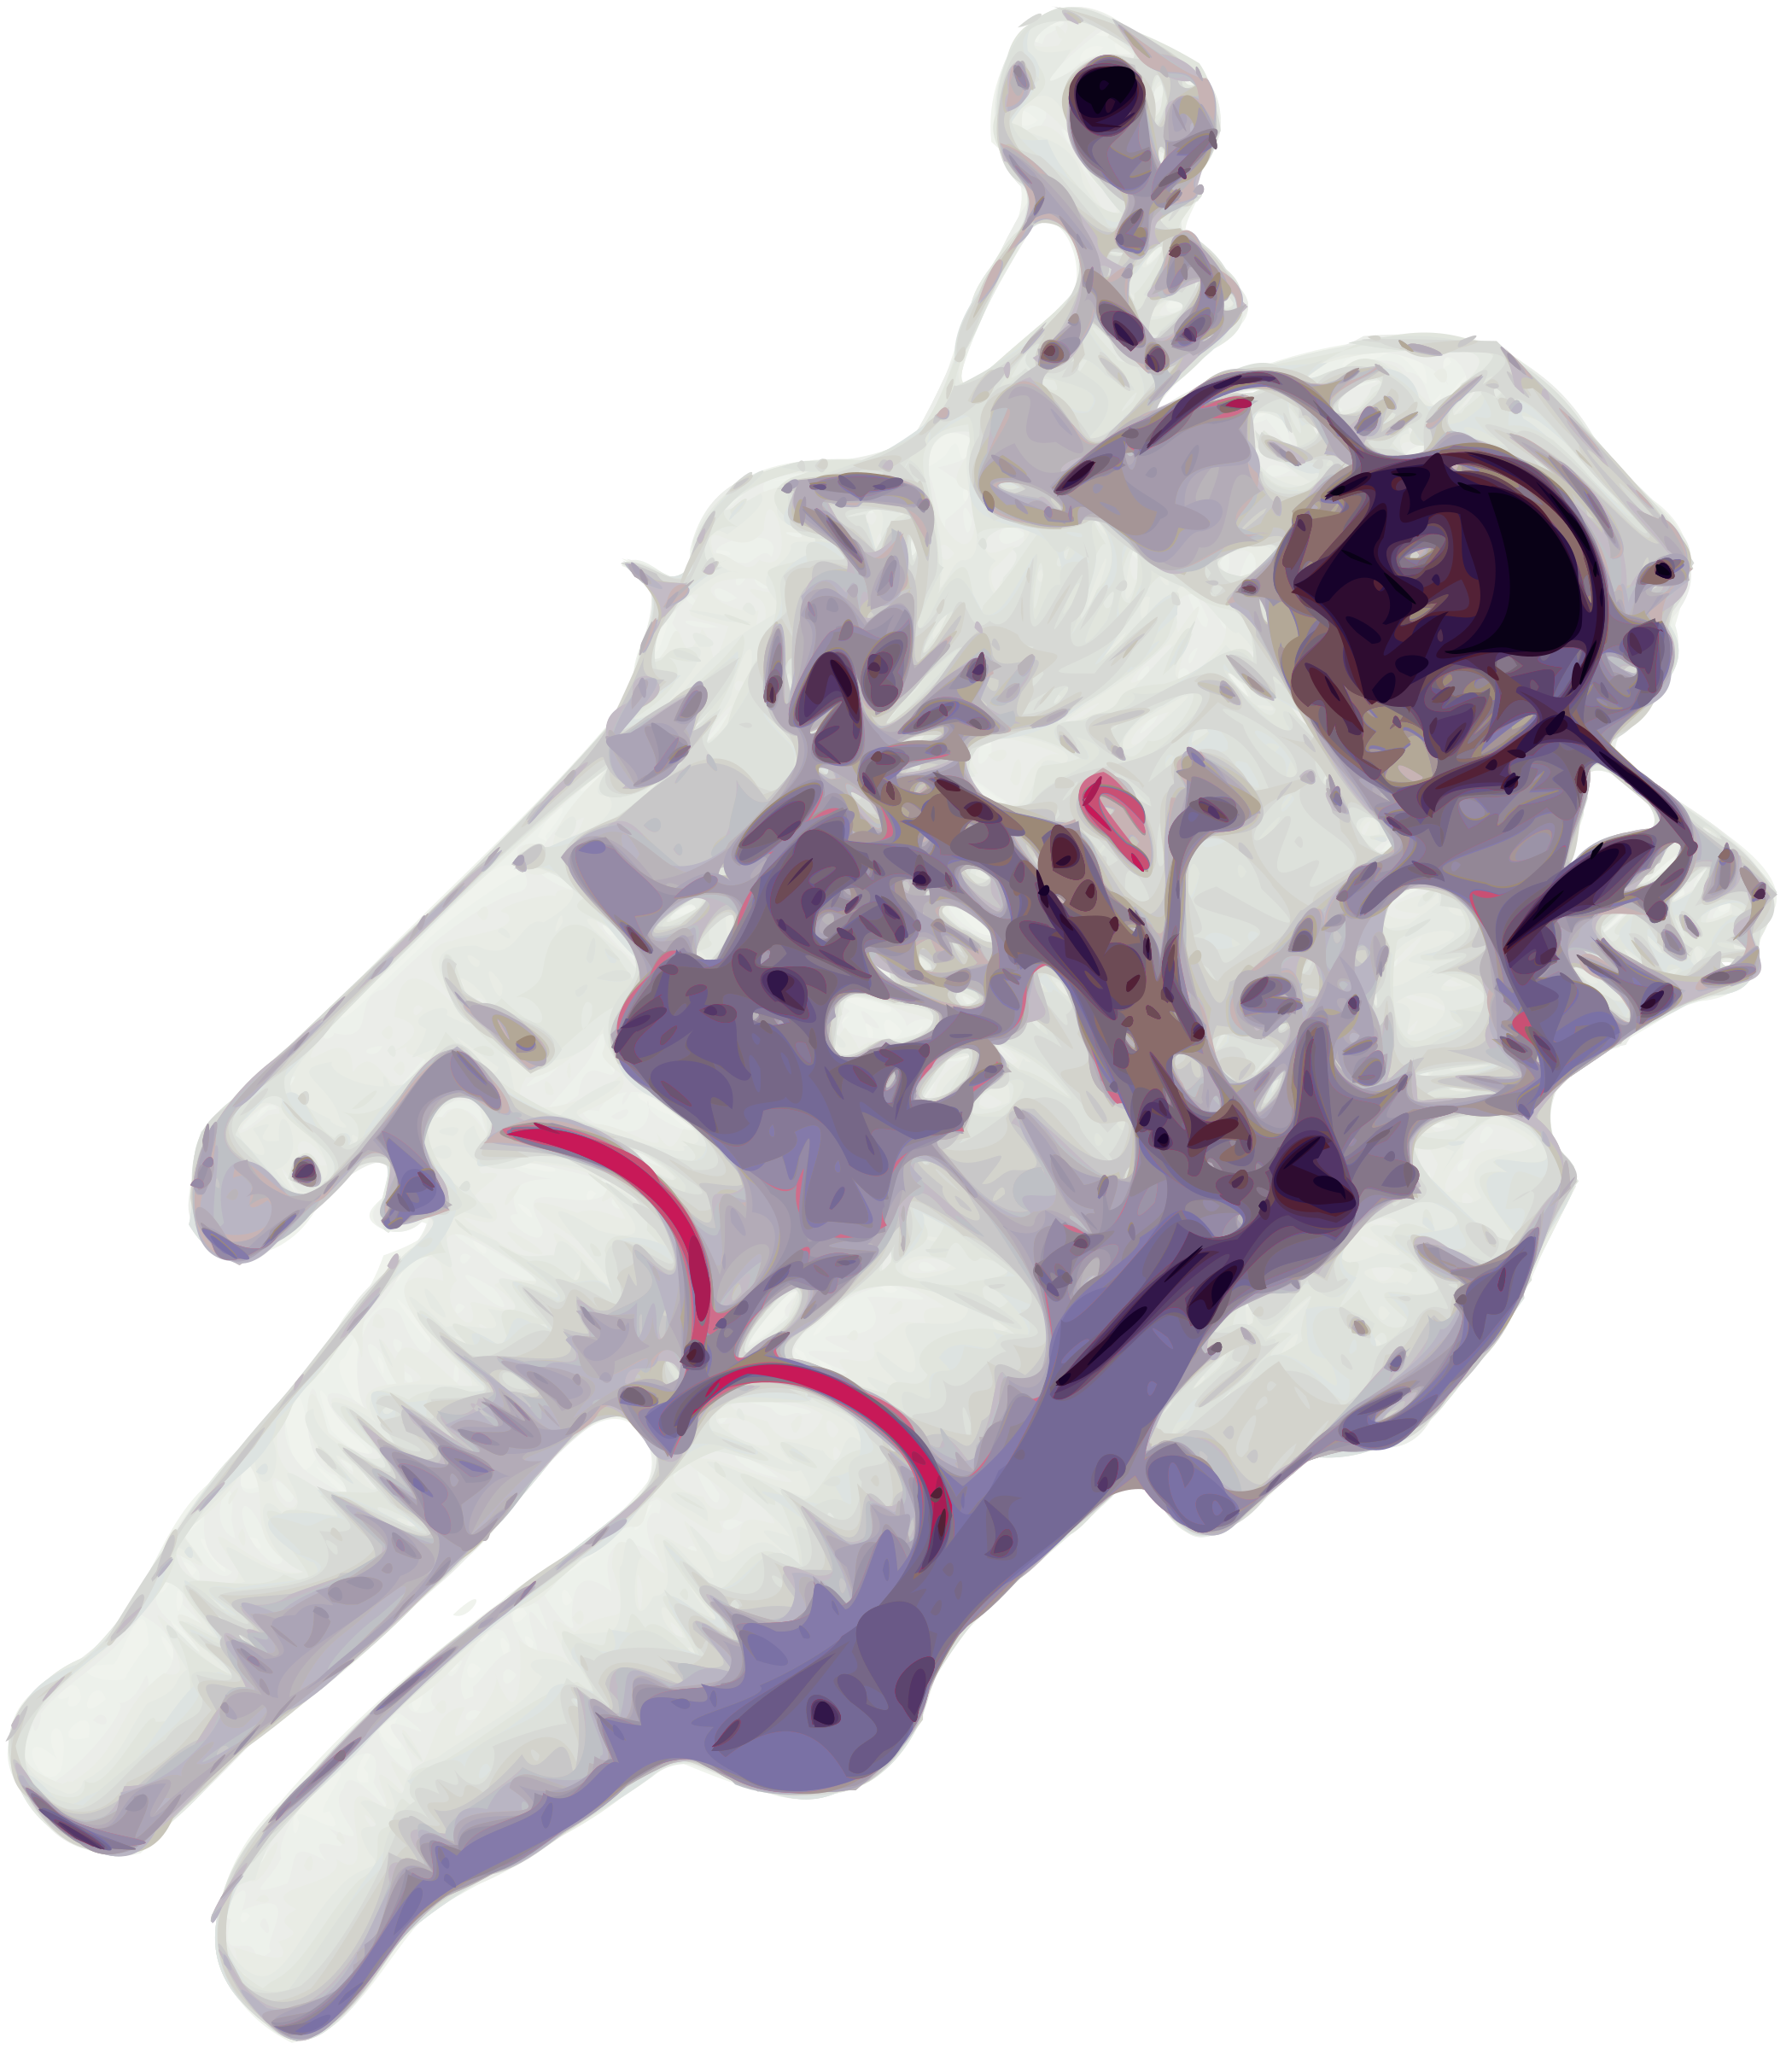 mask clipart astronaut